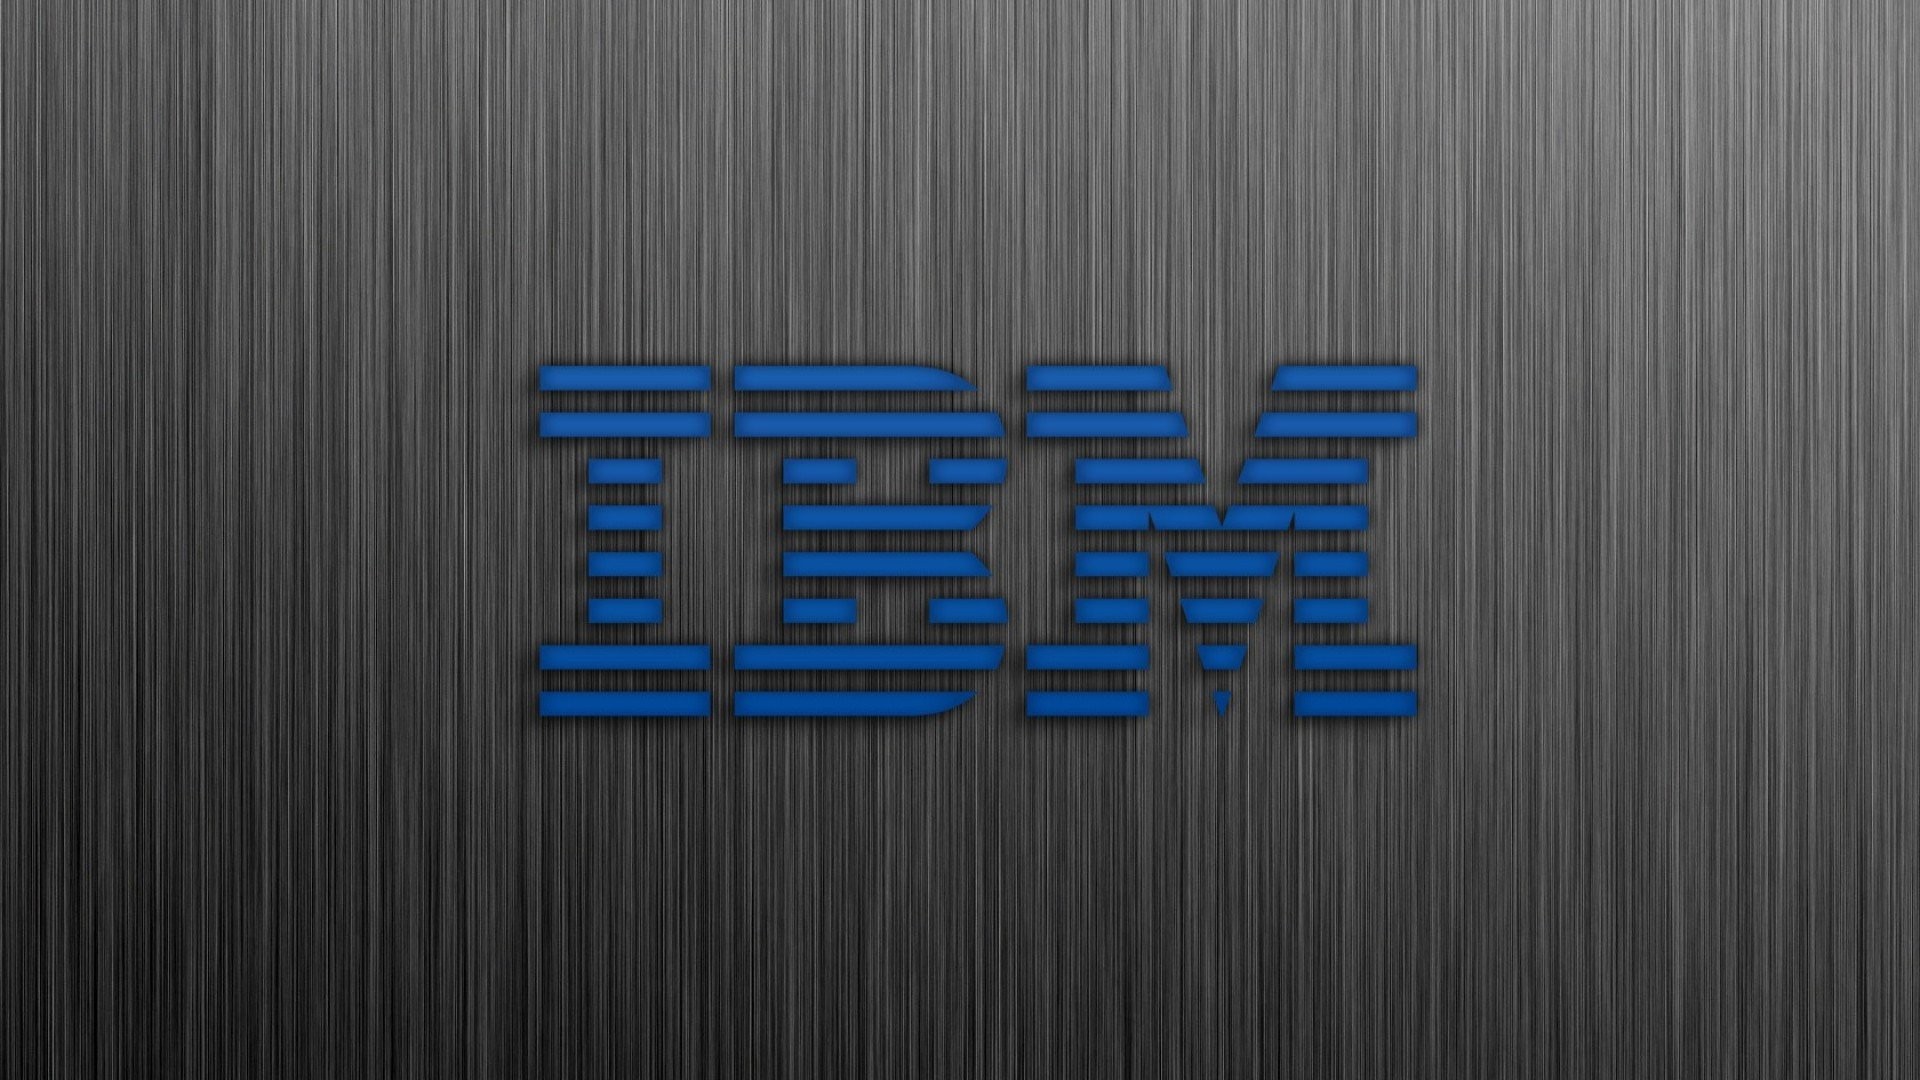 1920x1080 IBM Logo Pictures | Download Free Desktop Wallpaper Images & Pictures